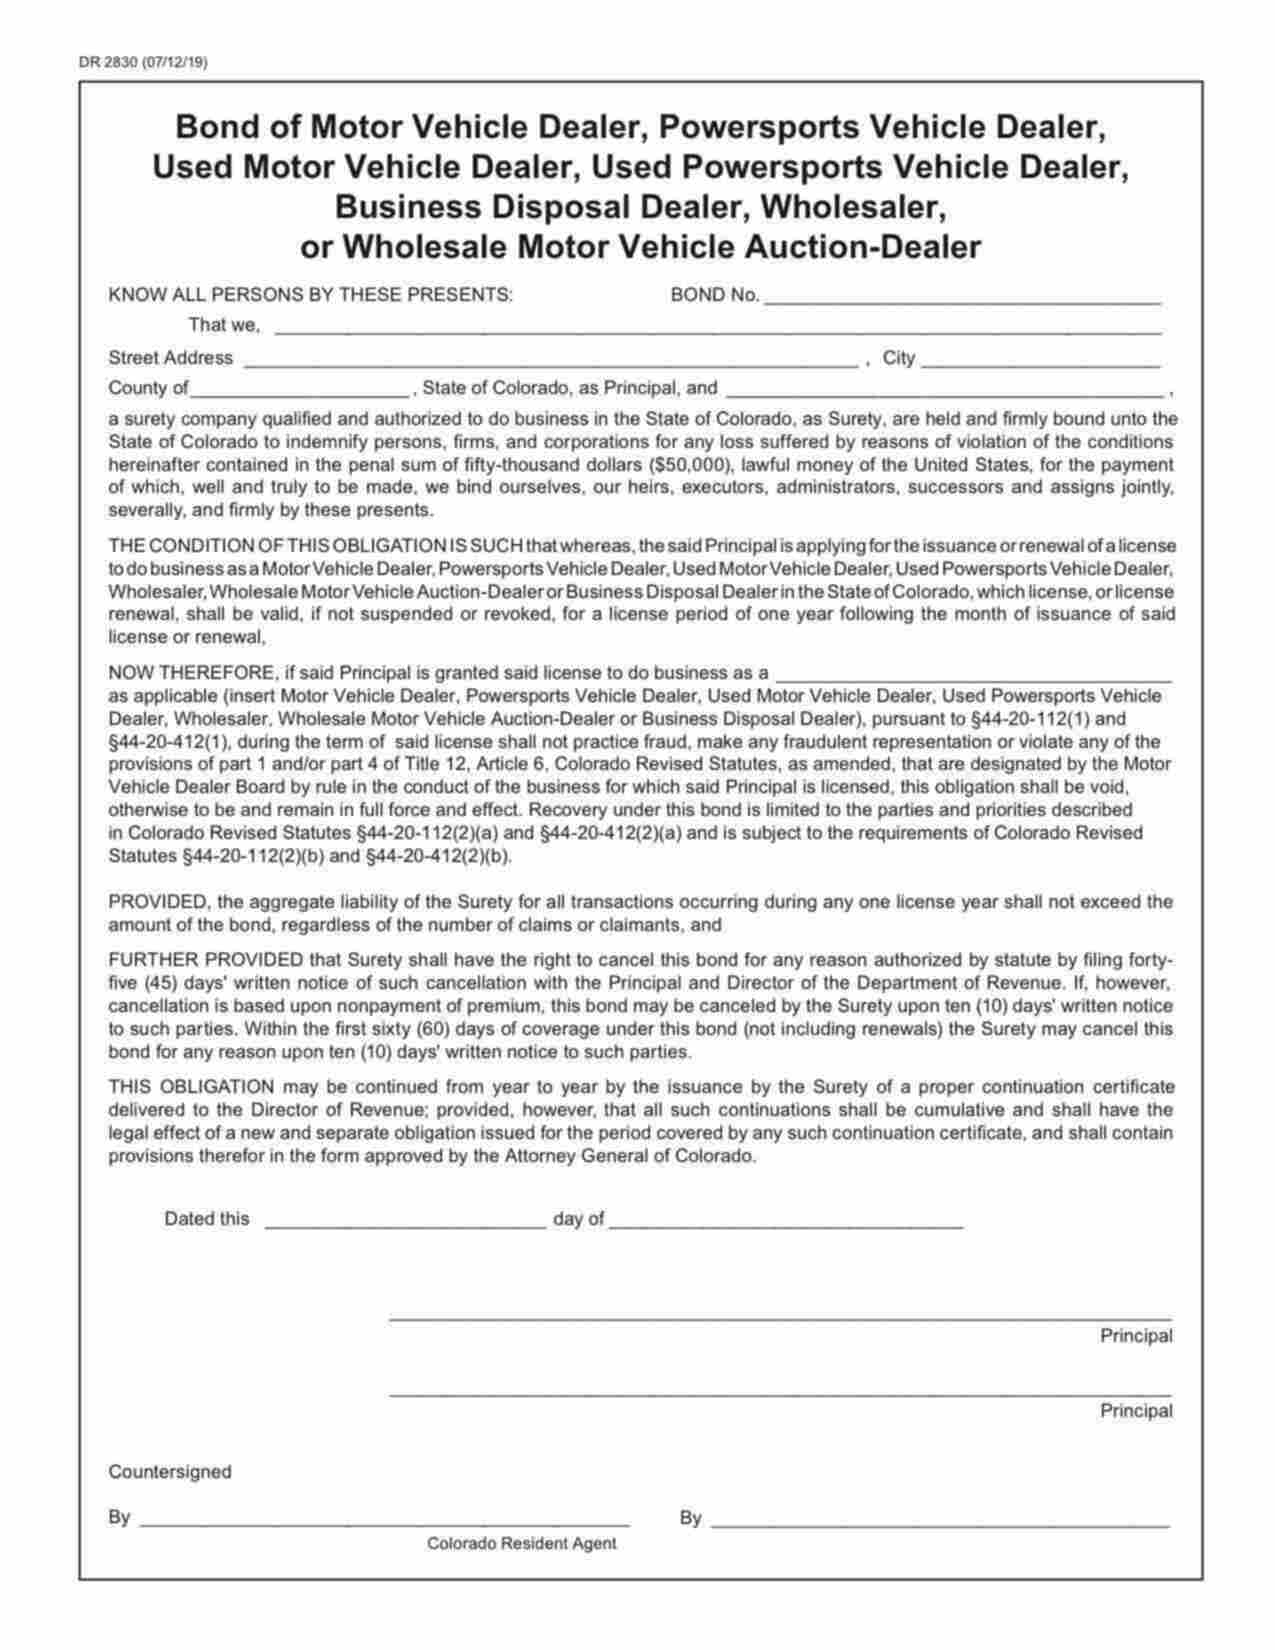 Colorado Used Motor Vehicle Dealer Bond Form